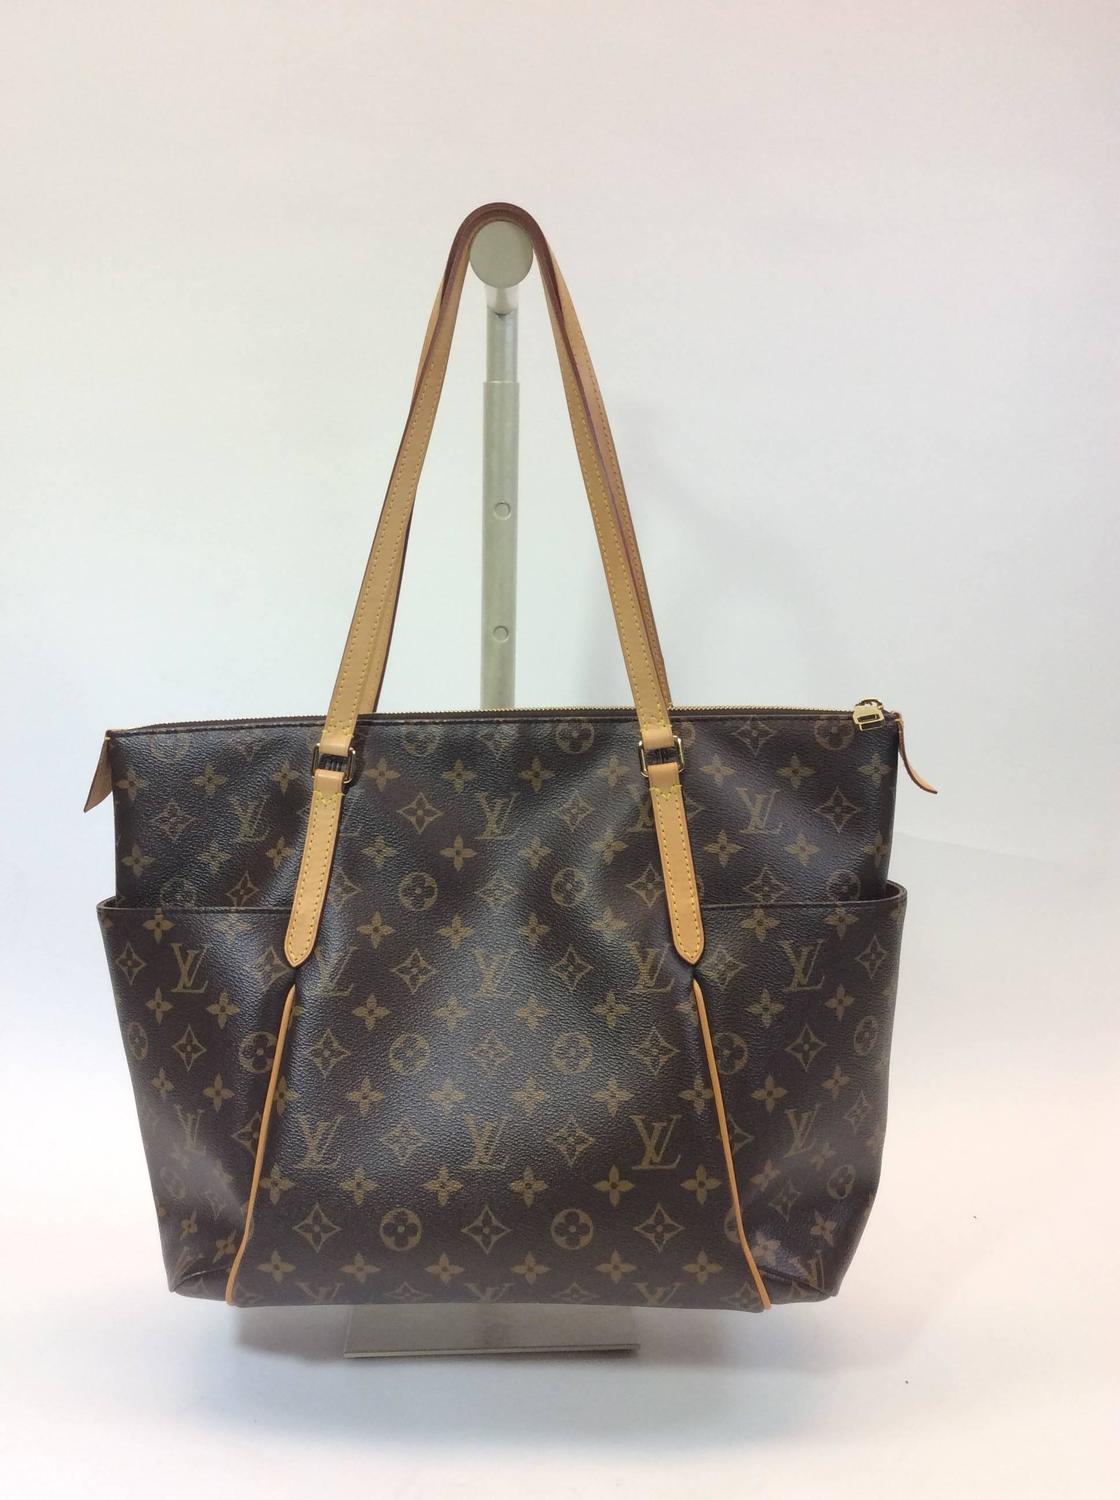 Louis Vuitton Classic Monogram Leather Tote Handbag at 1stdibs